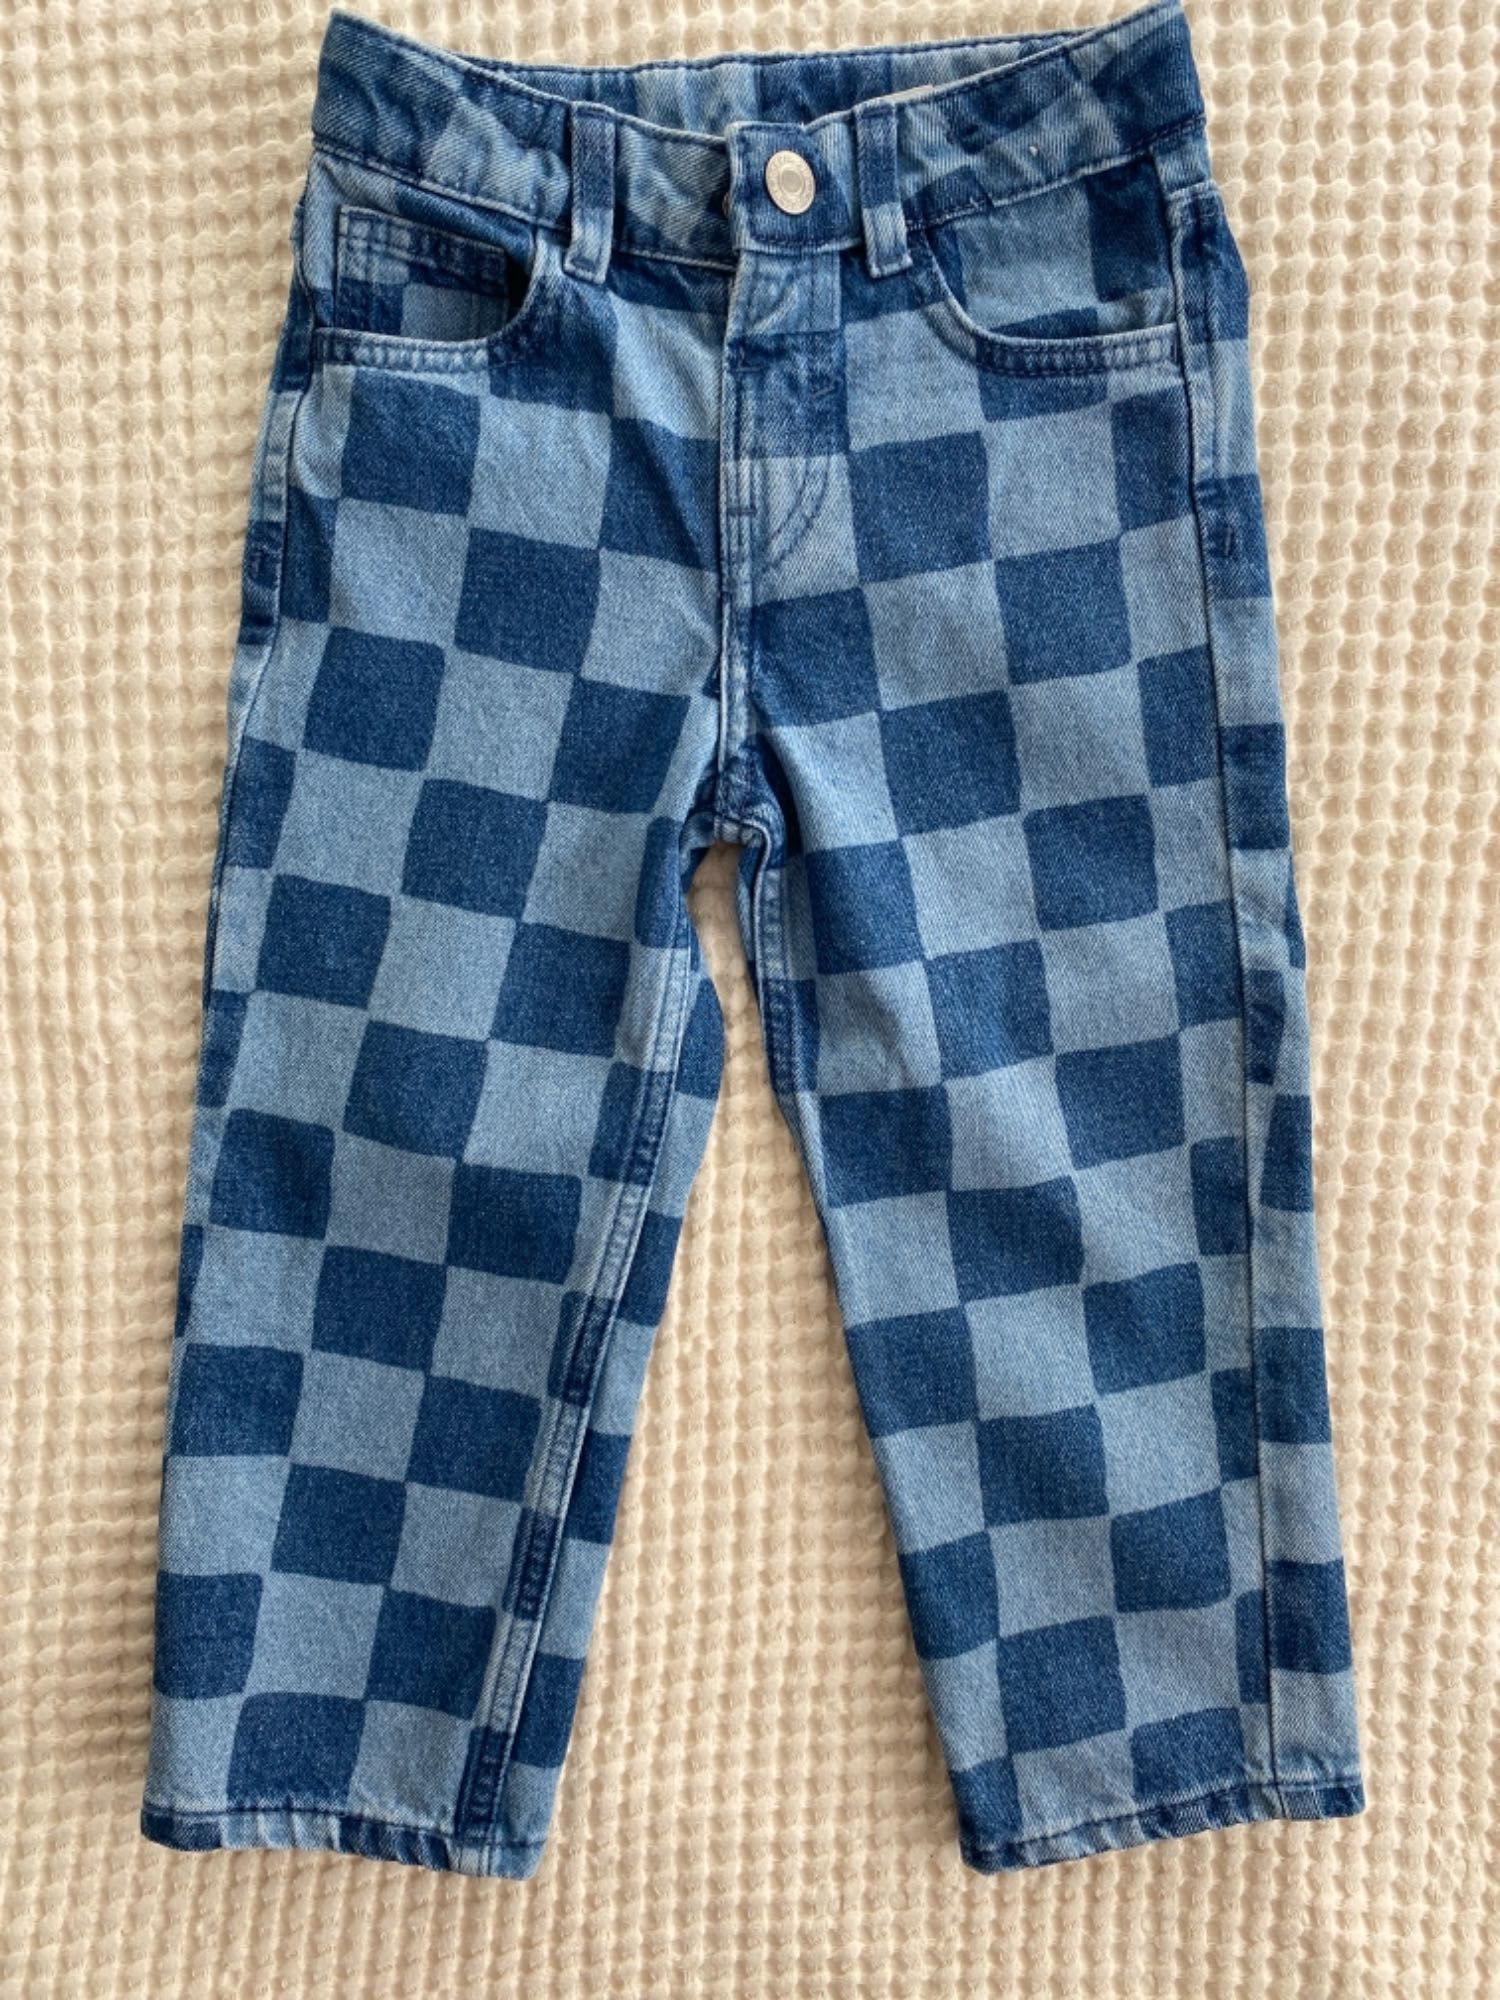 Spodnie jeansy dżinsy H&M HM roz 98 jak Bobo Choses tinycottons NOWE